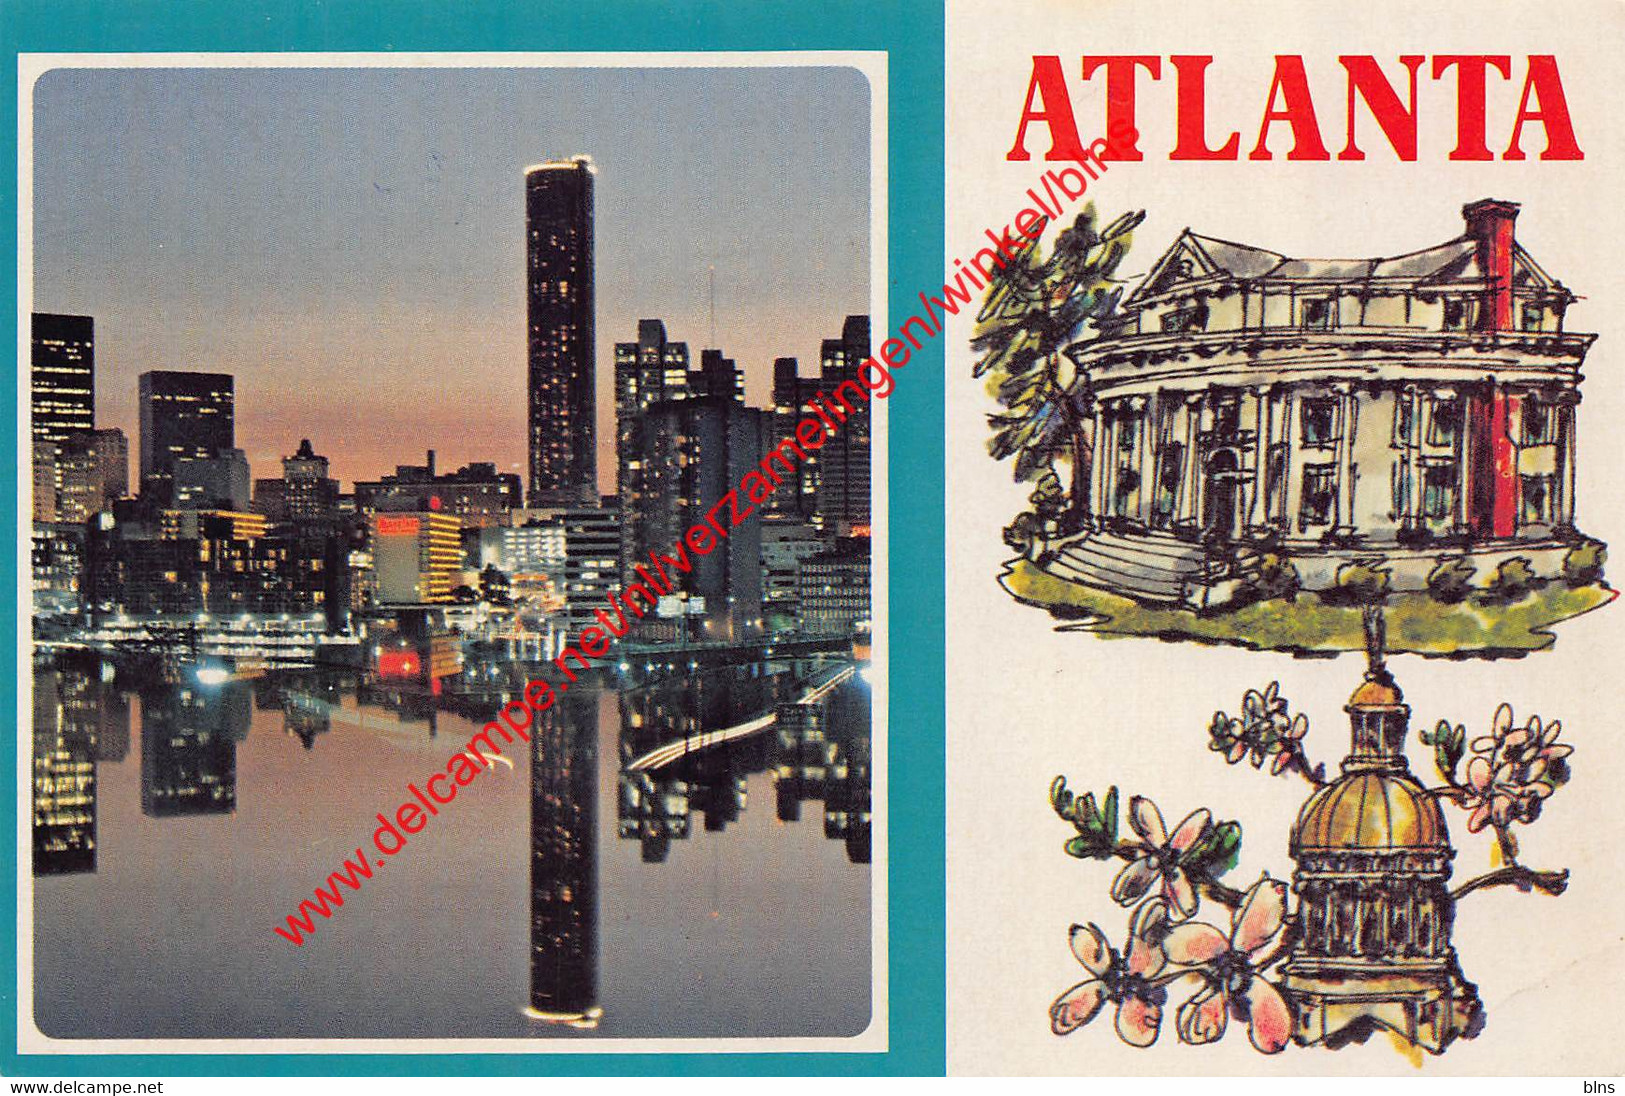 Atlanta Peachtree Center Plaza Hotel - Georgia - United States USA - Atlanta